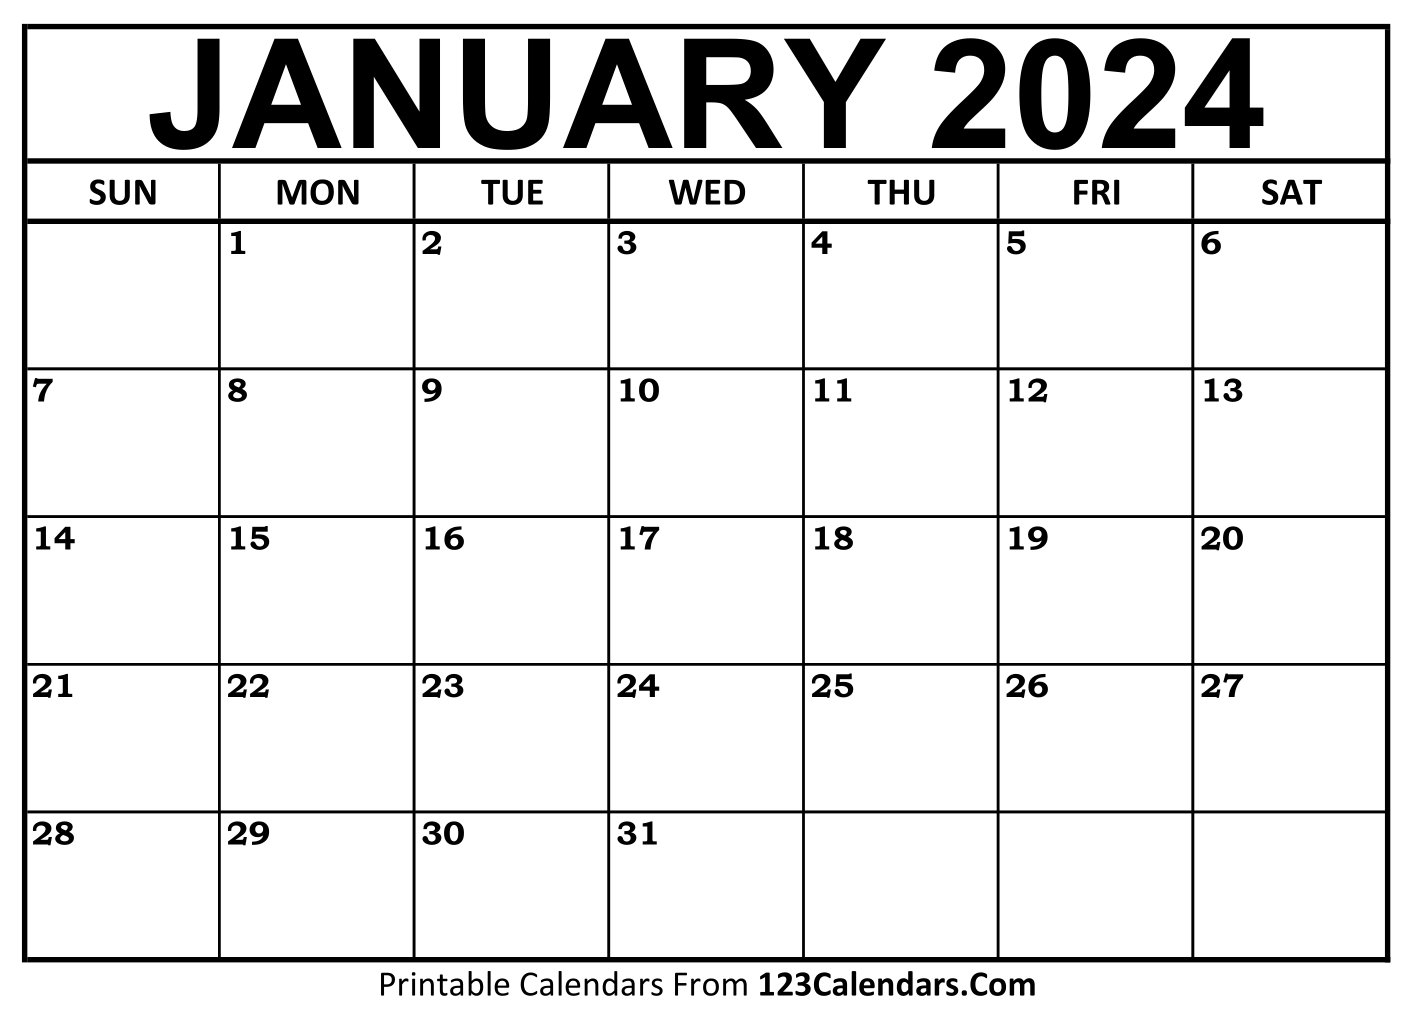 Printable January 2024 Calendar Templates - 123Calendars for January 2024 Monthly Calendar Printable